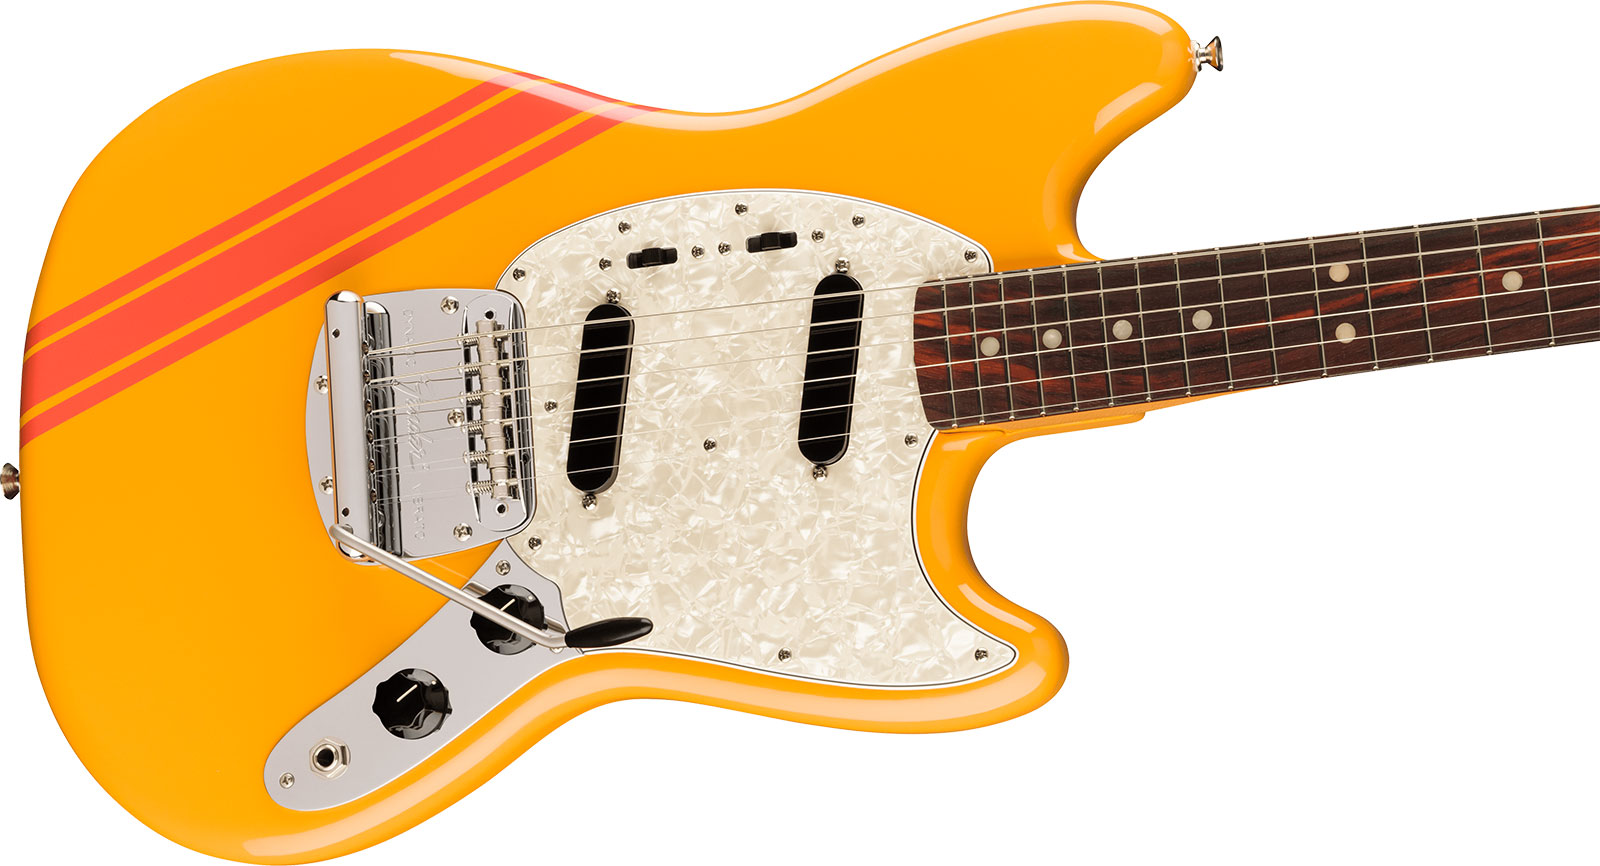 Fender Mustang 70s Competition Vintera 2 Mex 2s Trem Rw - Competition Orange - Retro rock electric guitar - Variation 2